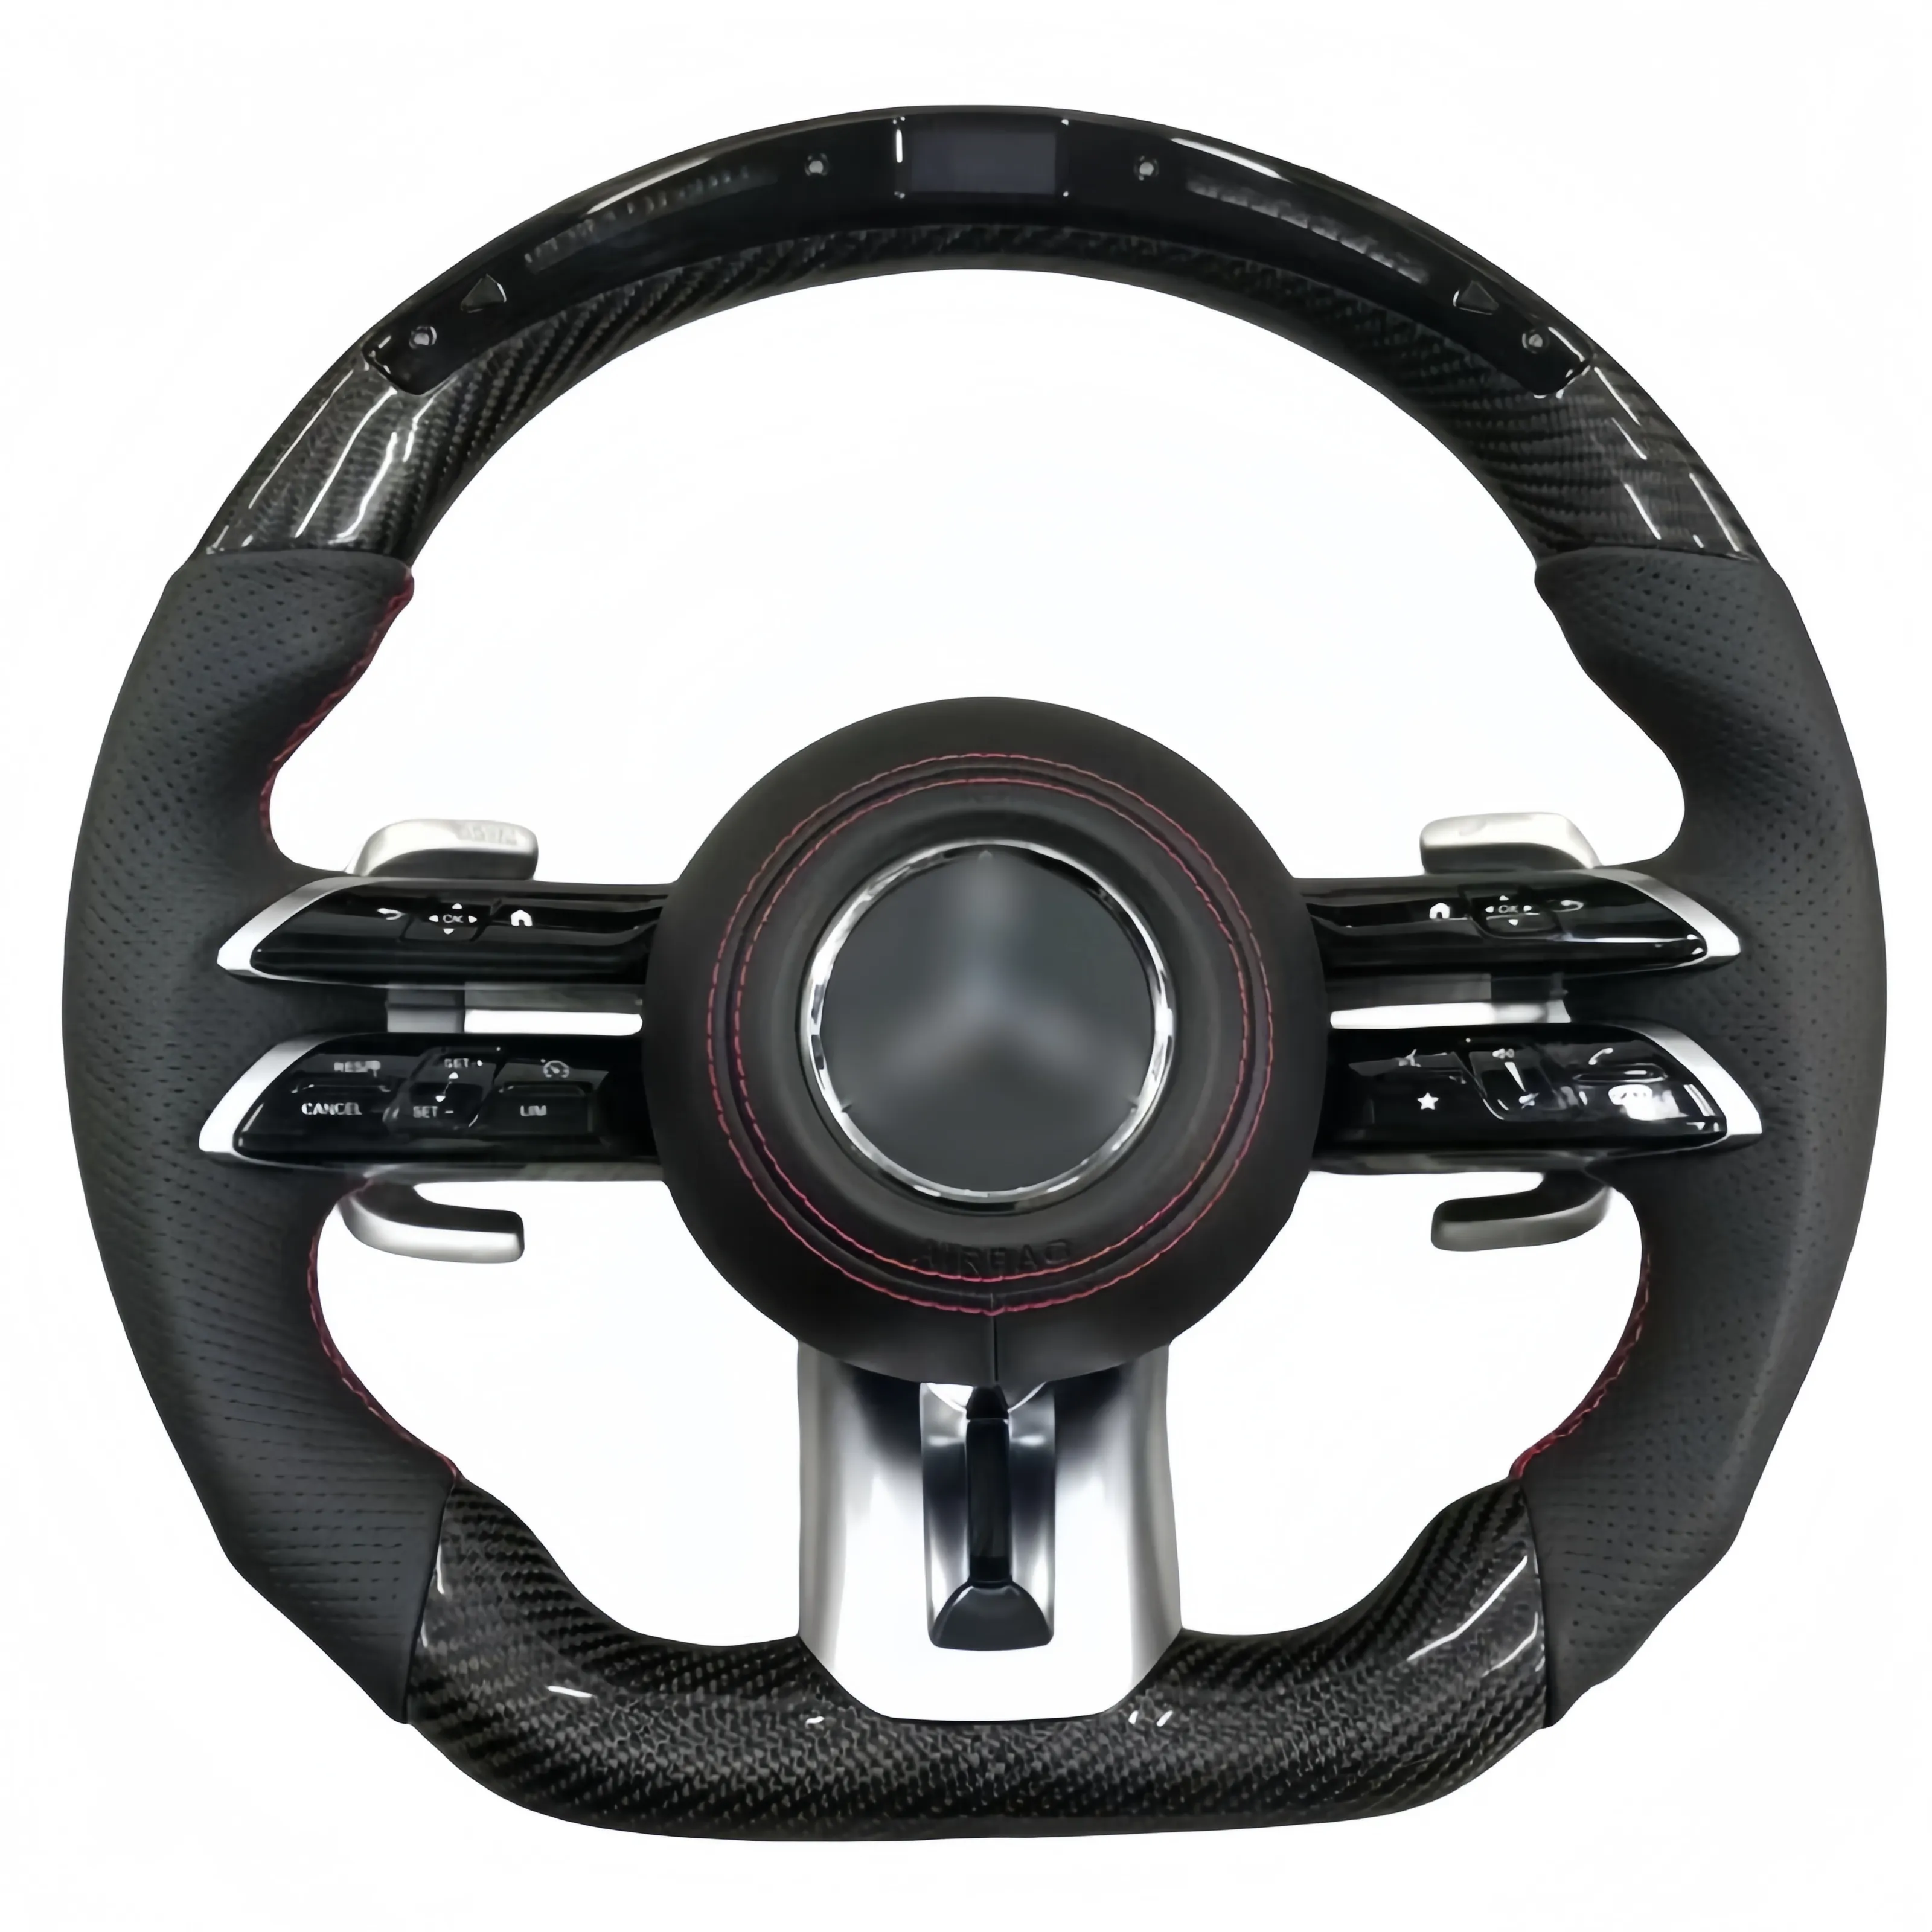 Suitable for Mercedes-Benz carbon fiber LED dragonfly steering wheel assembly S-class E-class C-class A-class E260 E300 W215